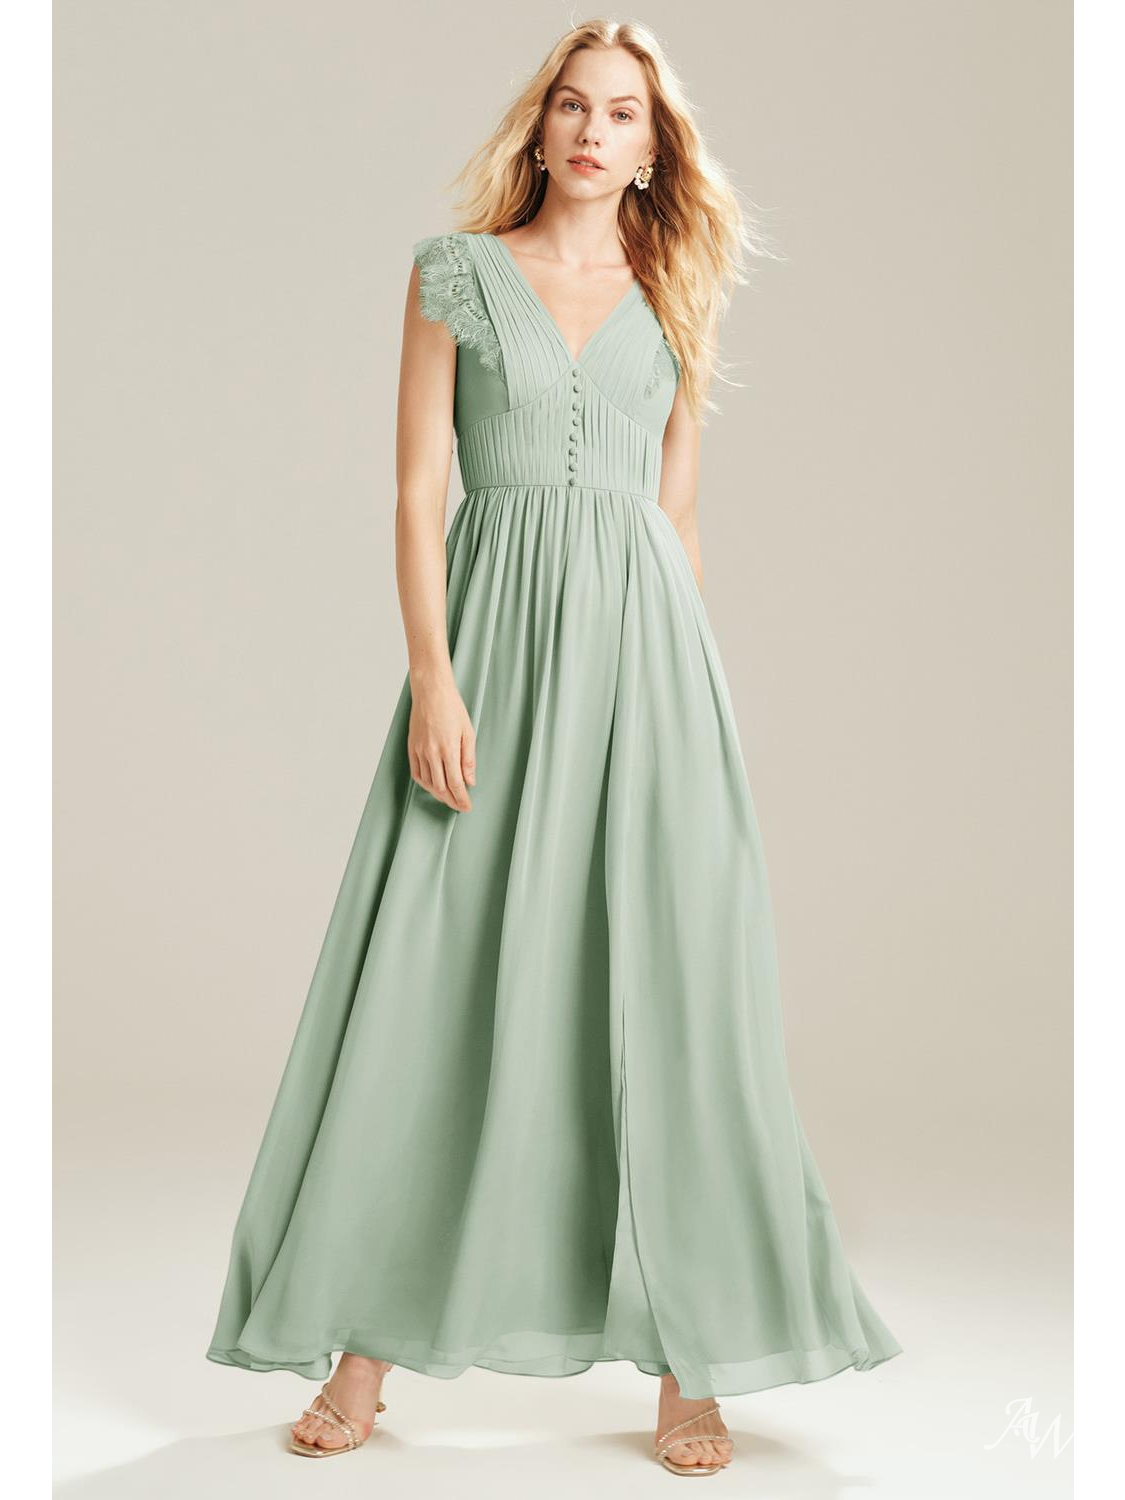 AW Kelsey Dress, Sage Green Long Bridesmaid Dresses, 99.99 | AW Bridal